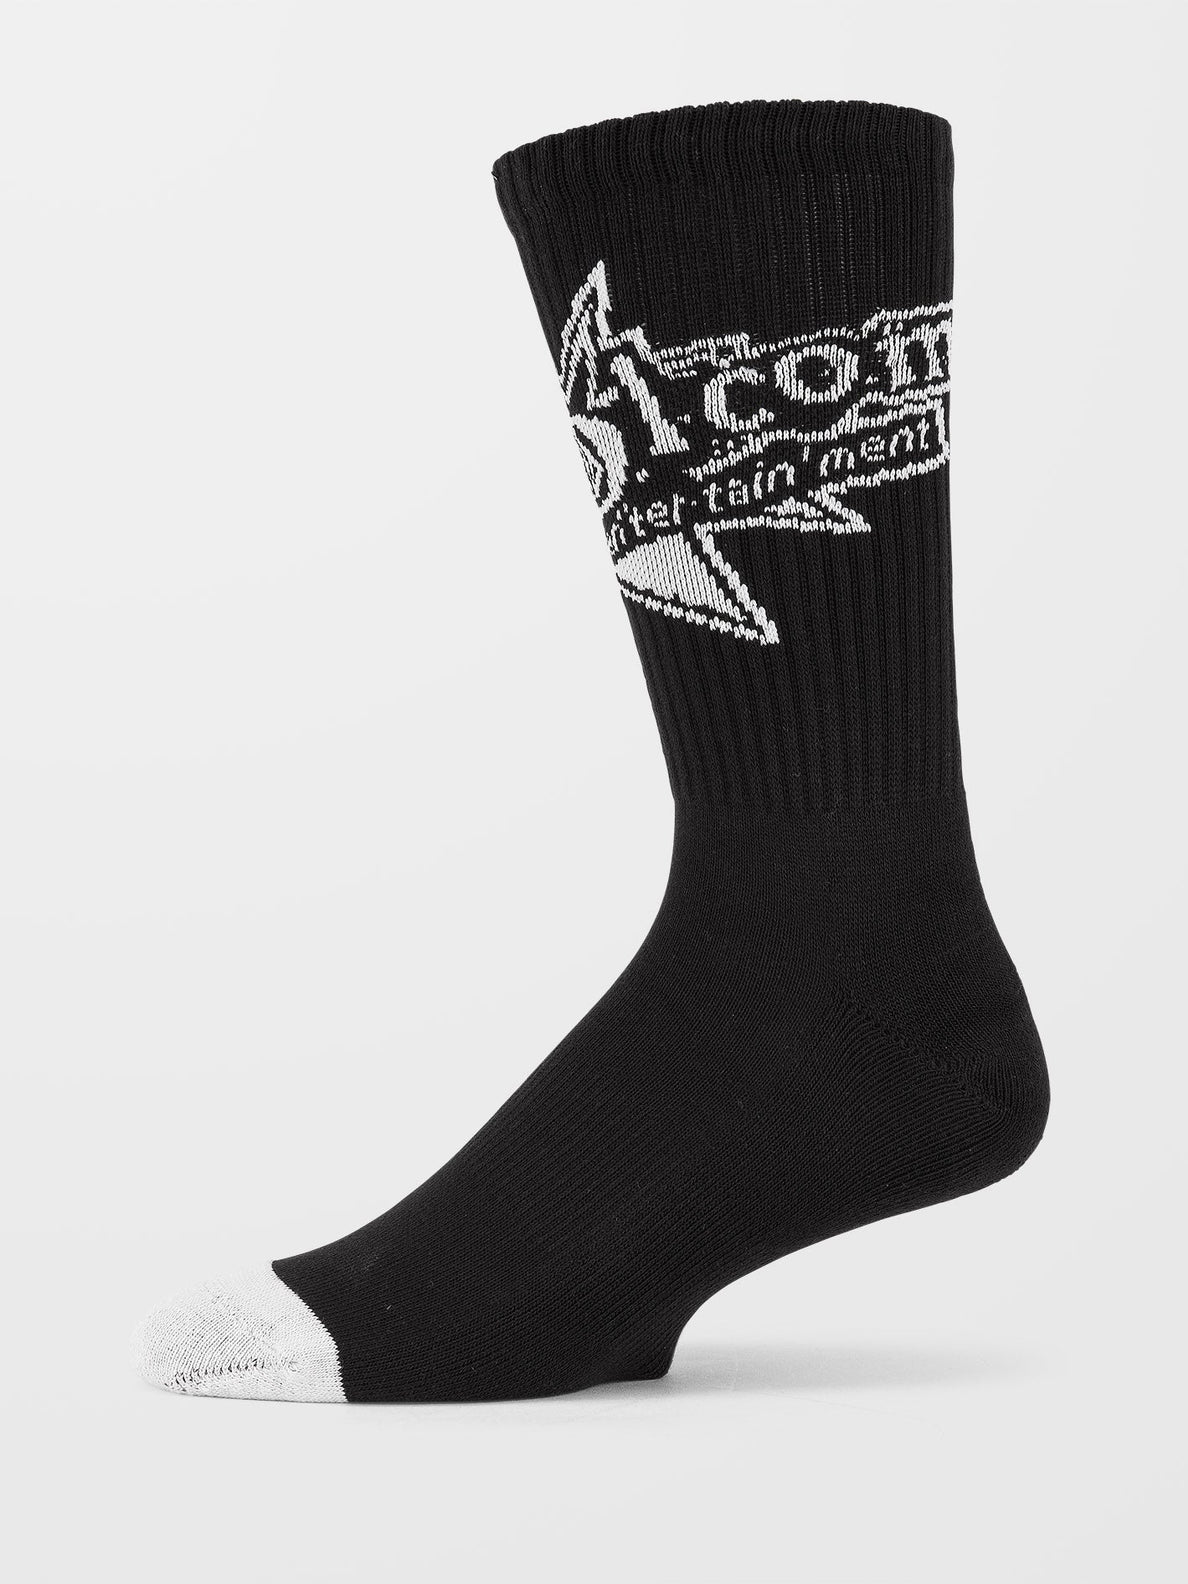 Volcom V Ent Sock Premium Temple Teal